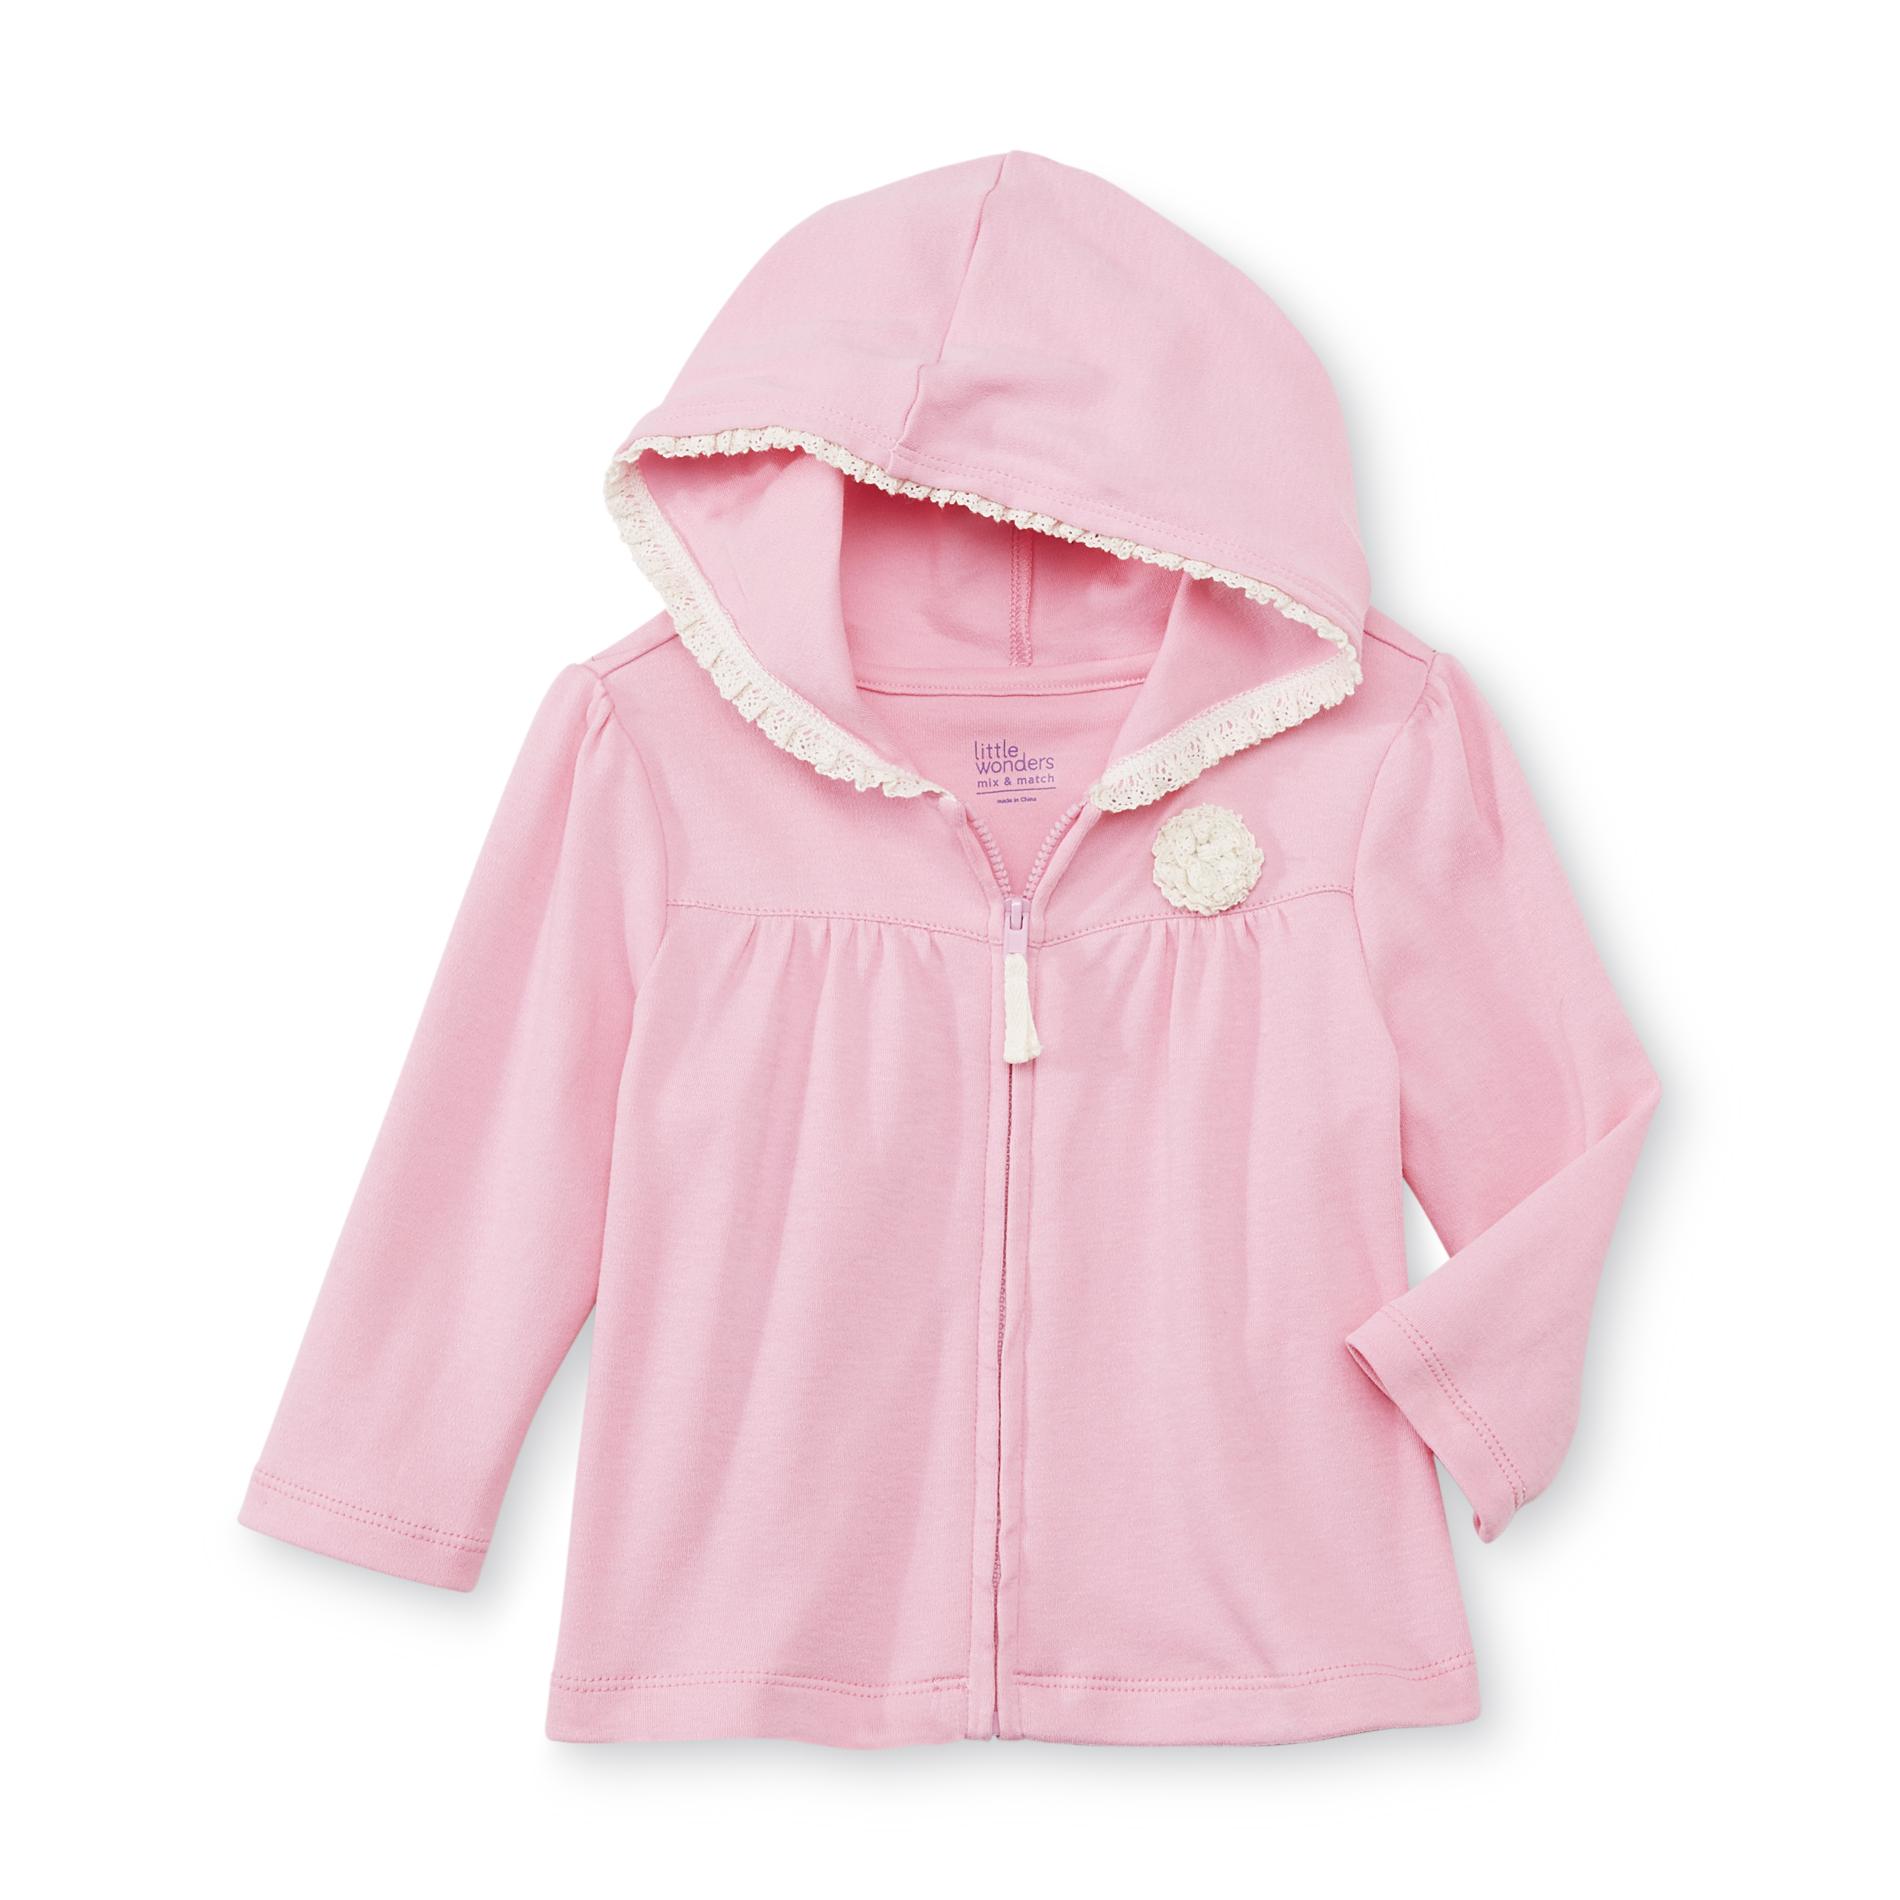 Little Wonders Newborn & Infant Girl's Hoodie Jacket - Lace Trim